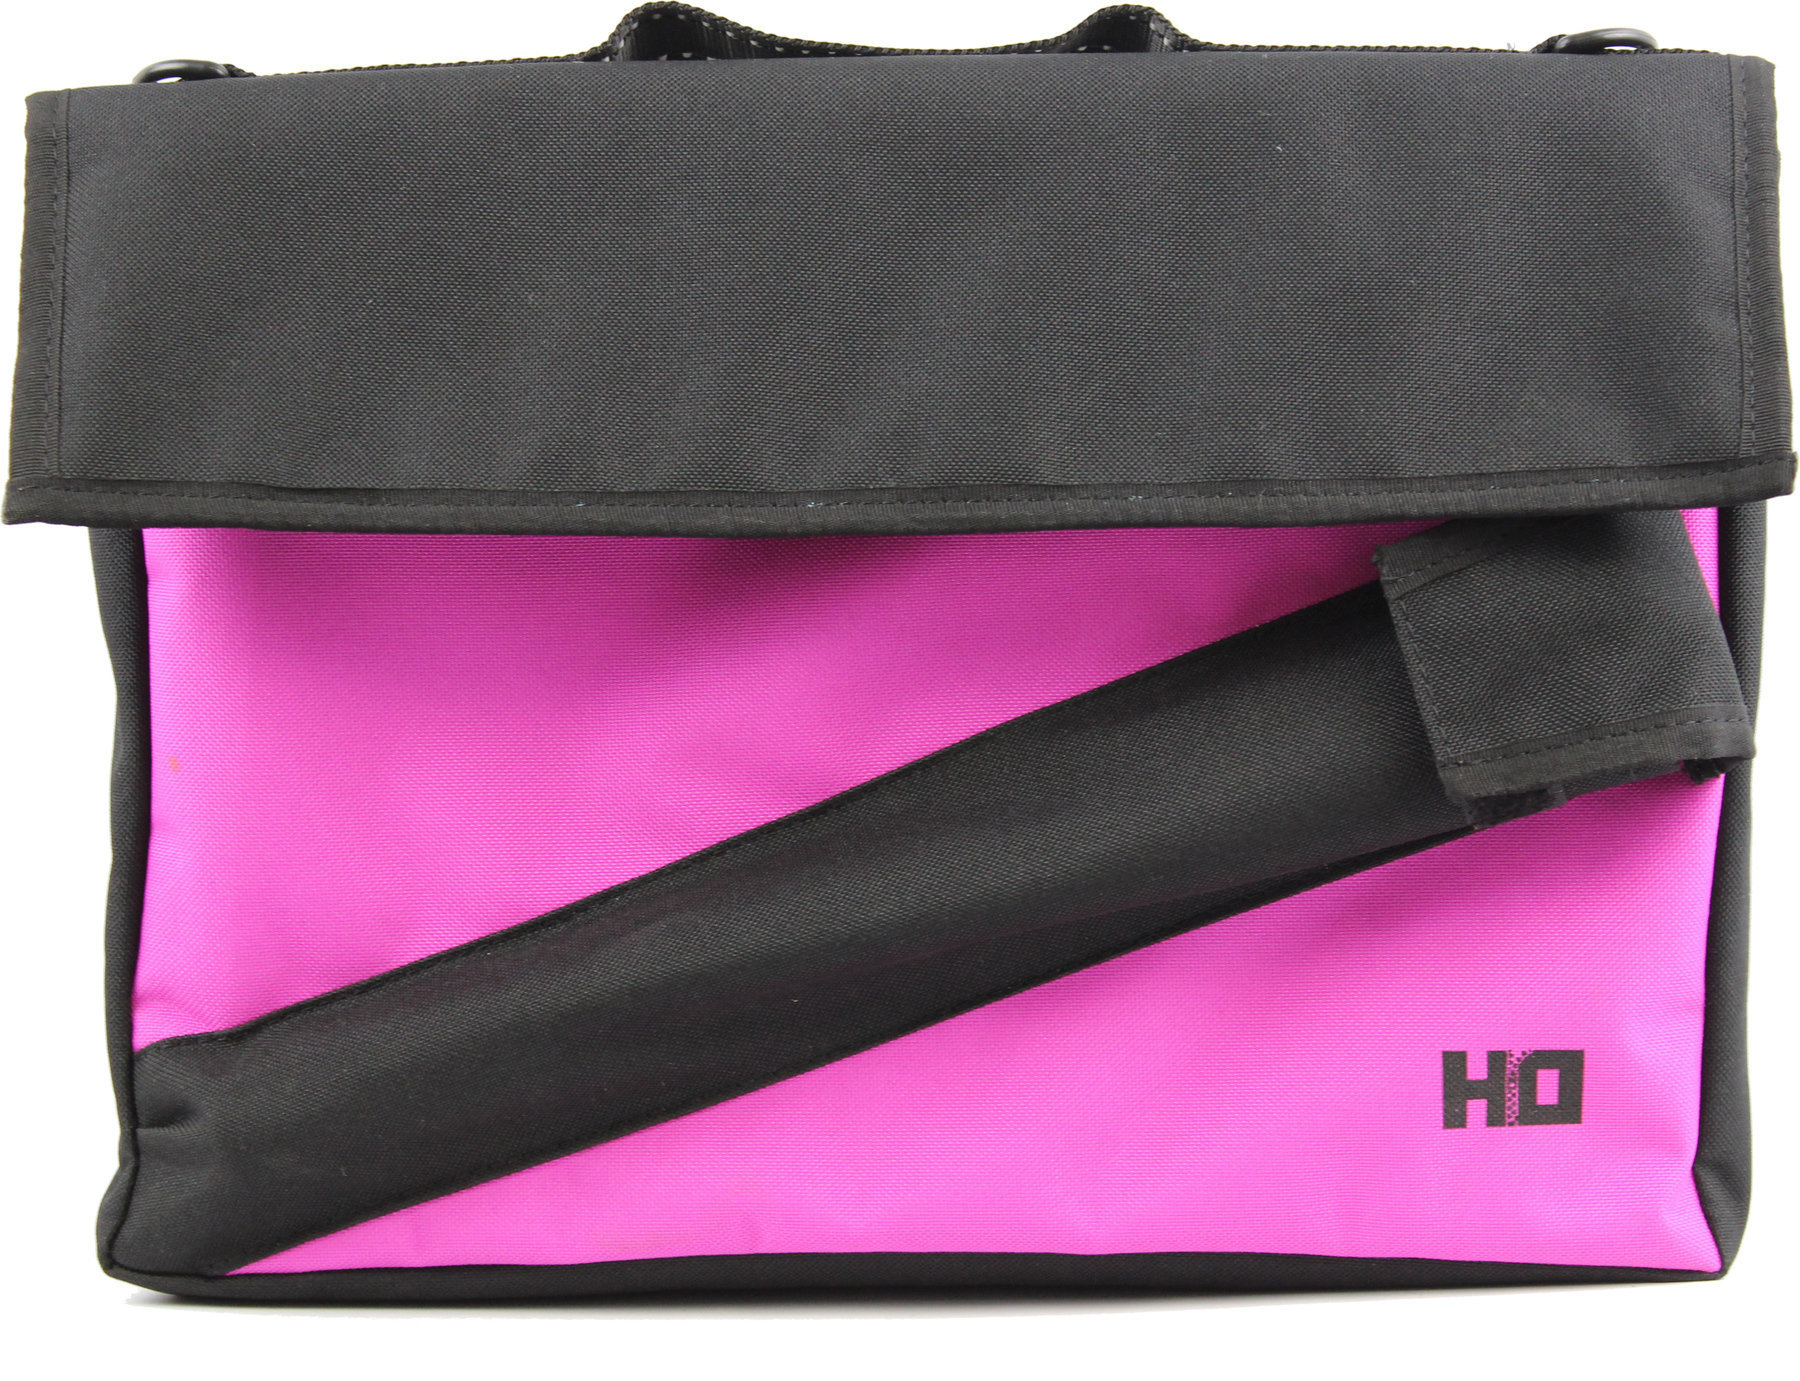 Messenger Bag Hudební Obaly H-O Flautino Pink Reflex-Black